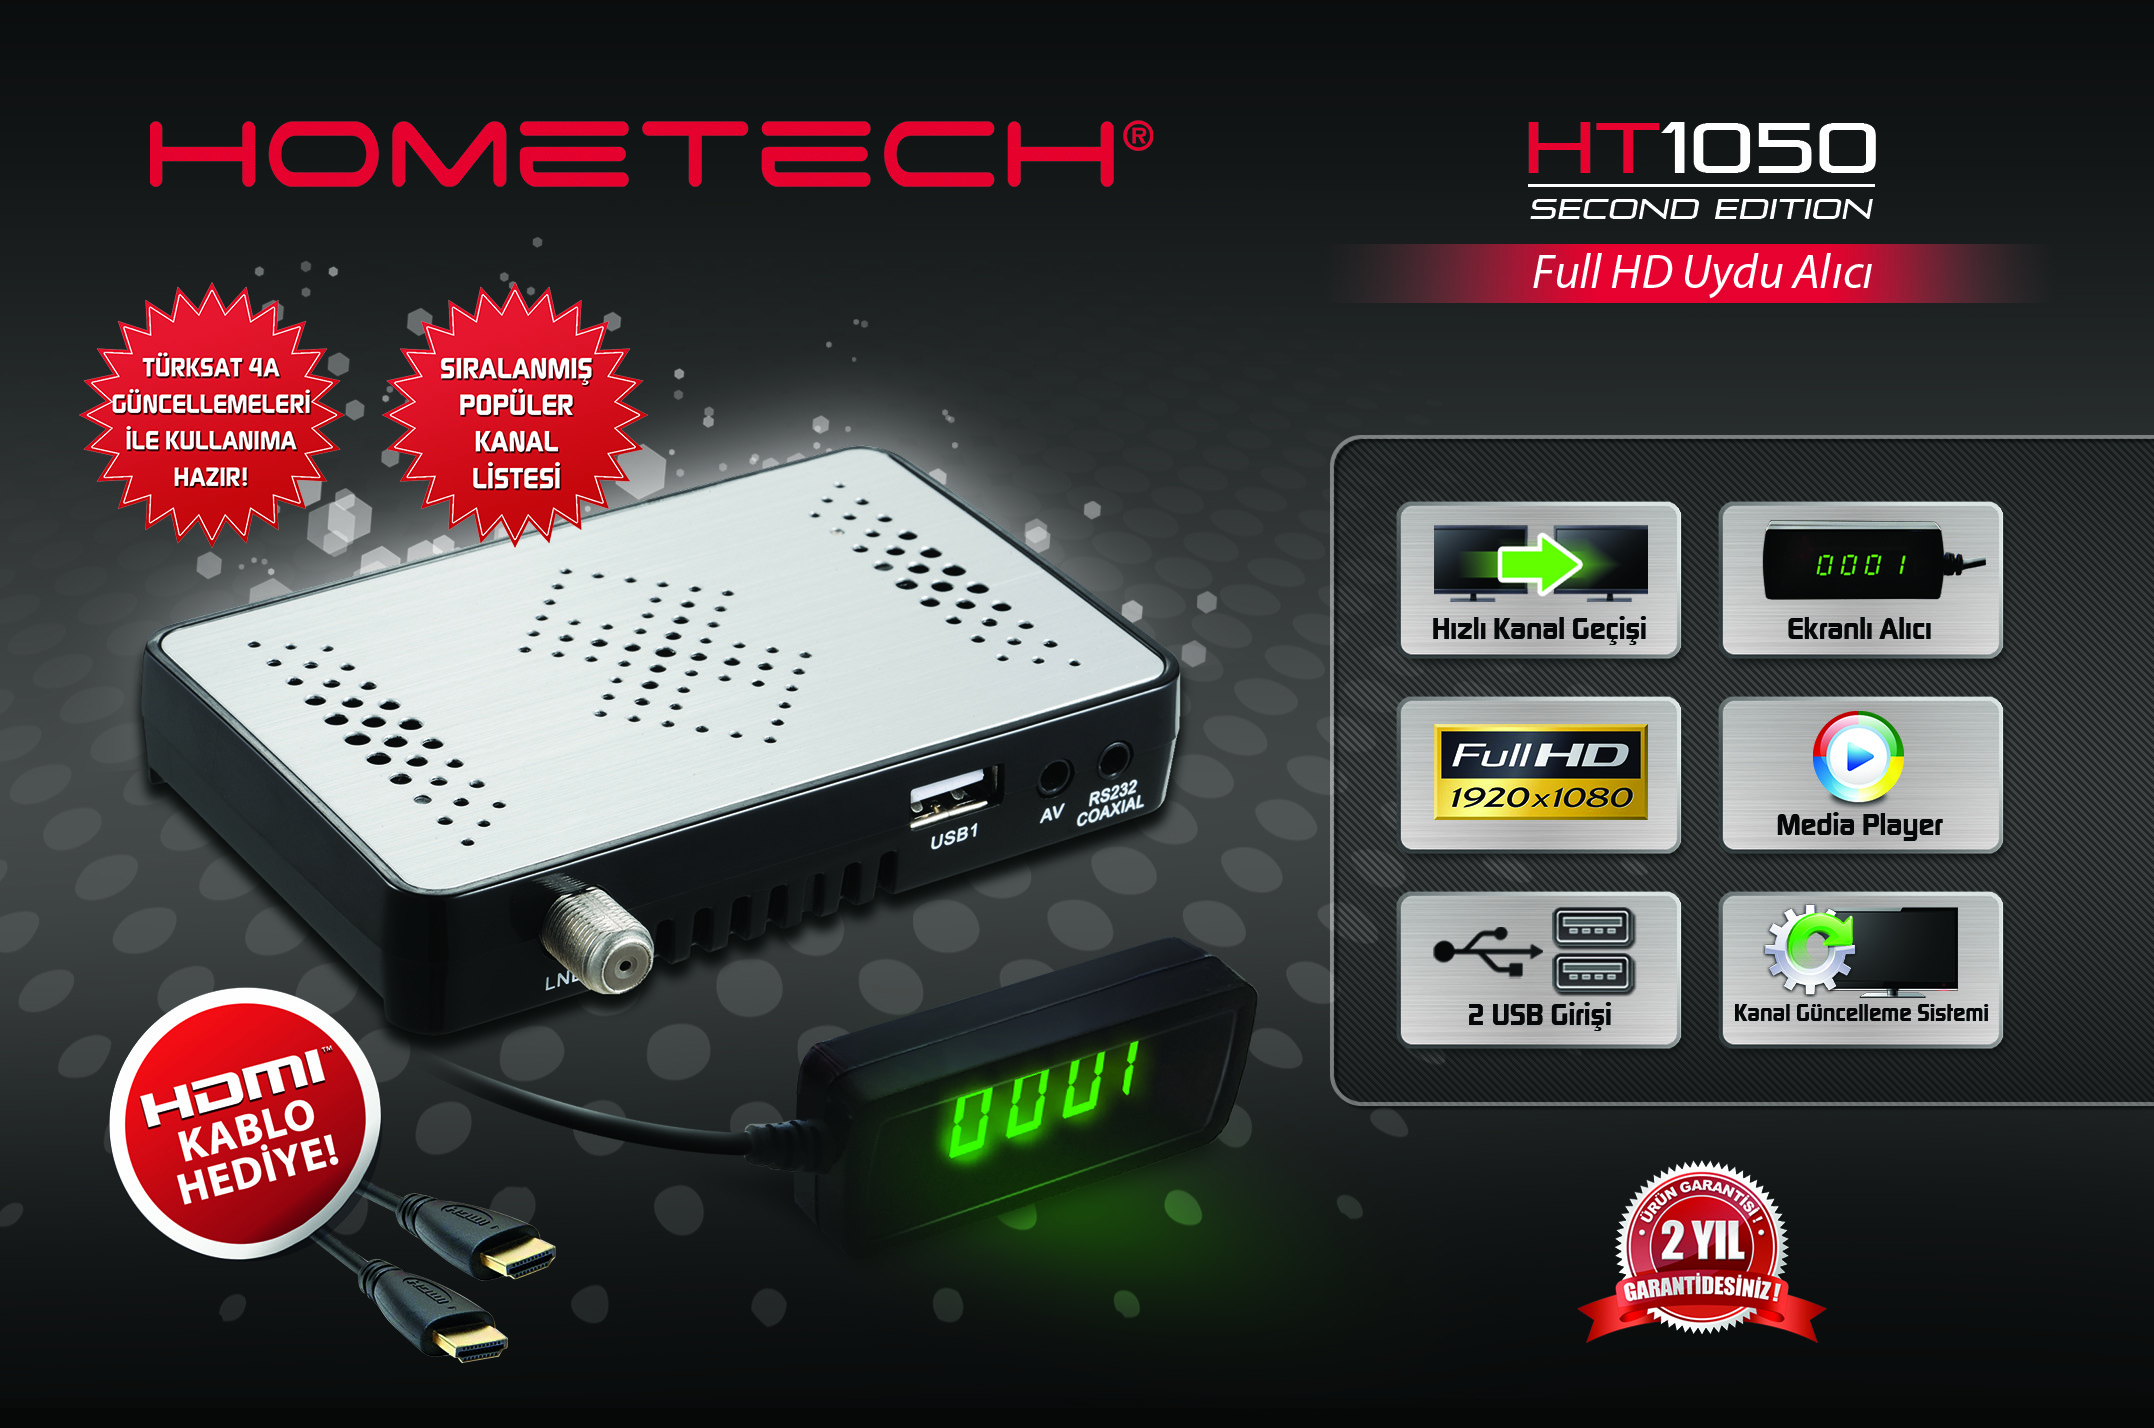 Hometech HT 1050 Second Edition